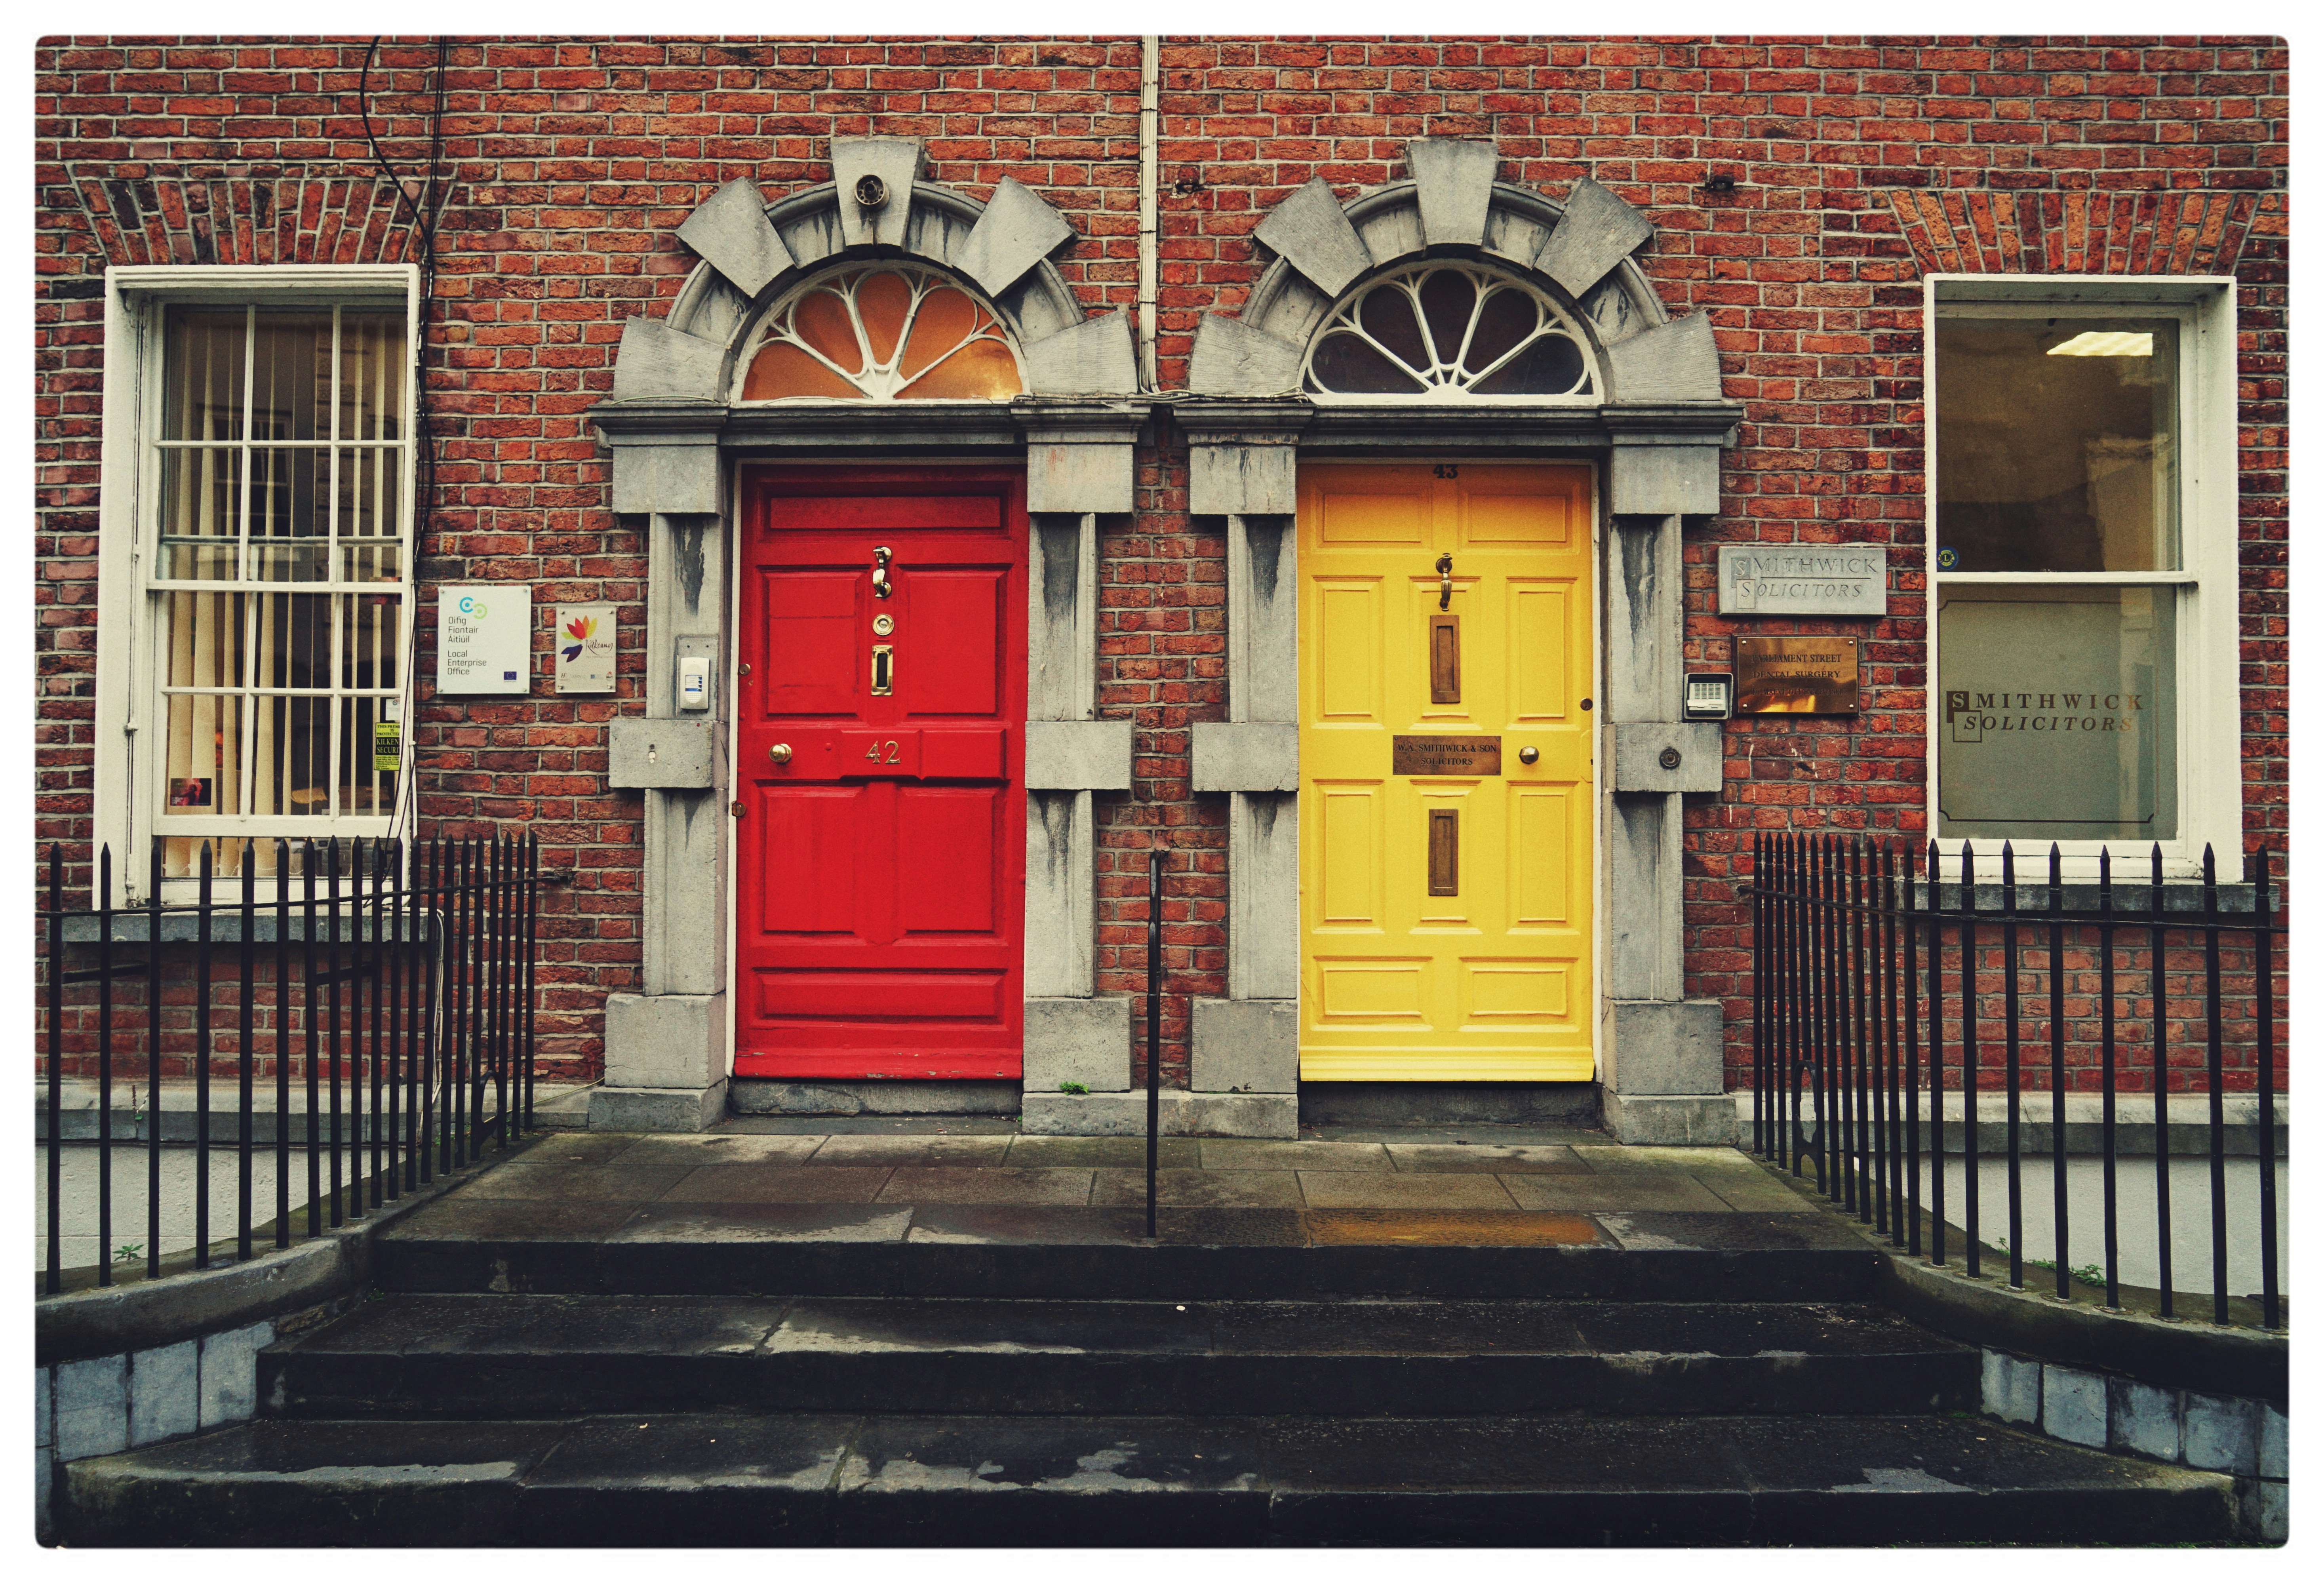 Dublin, Ireland (photo credit: Robert Anasch via unsplash)